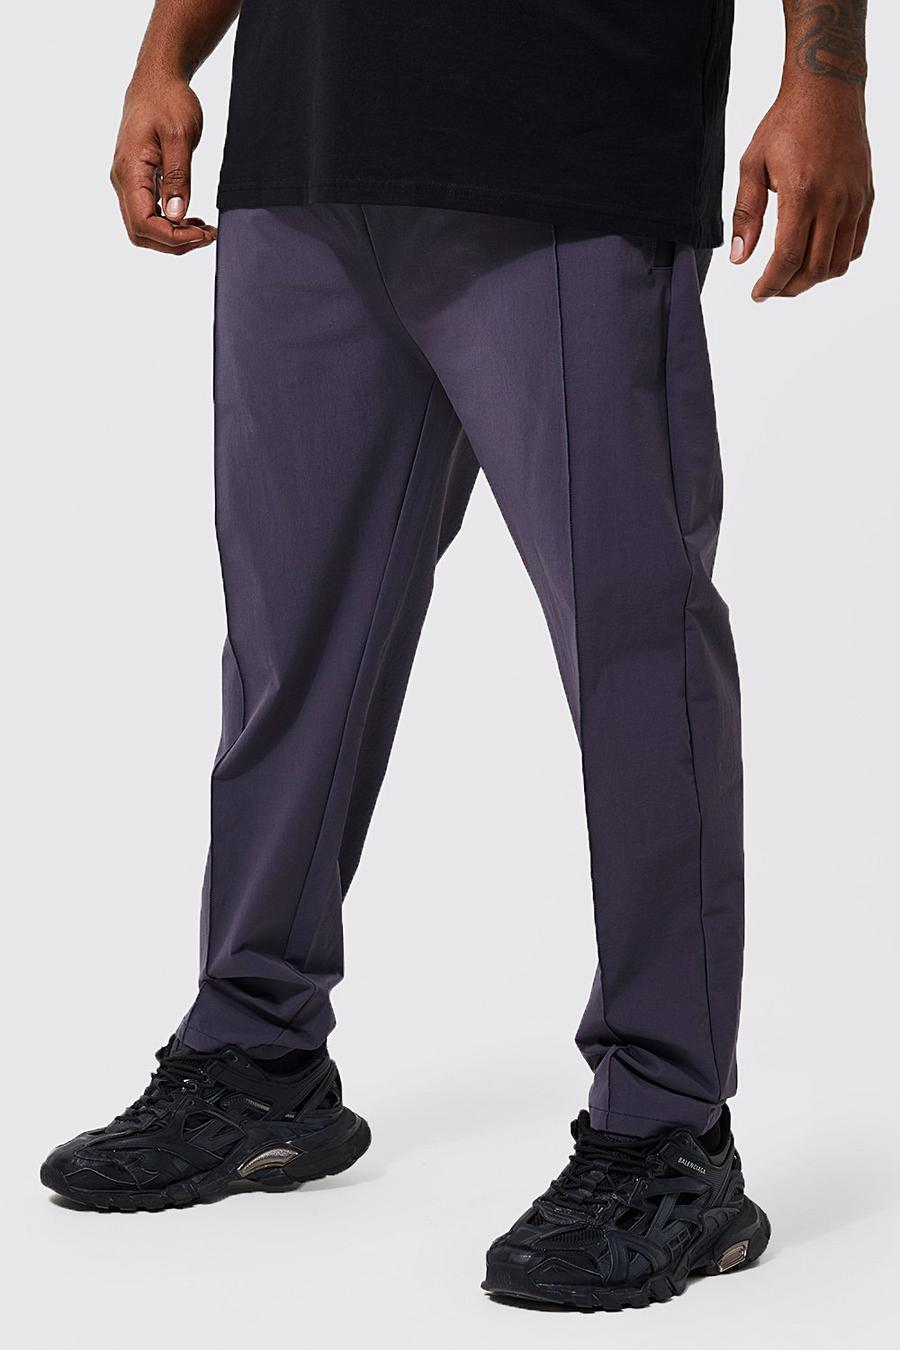 Pantalón Plus plisado ajustado técnico, Dark grey grigio